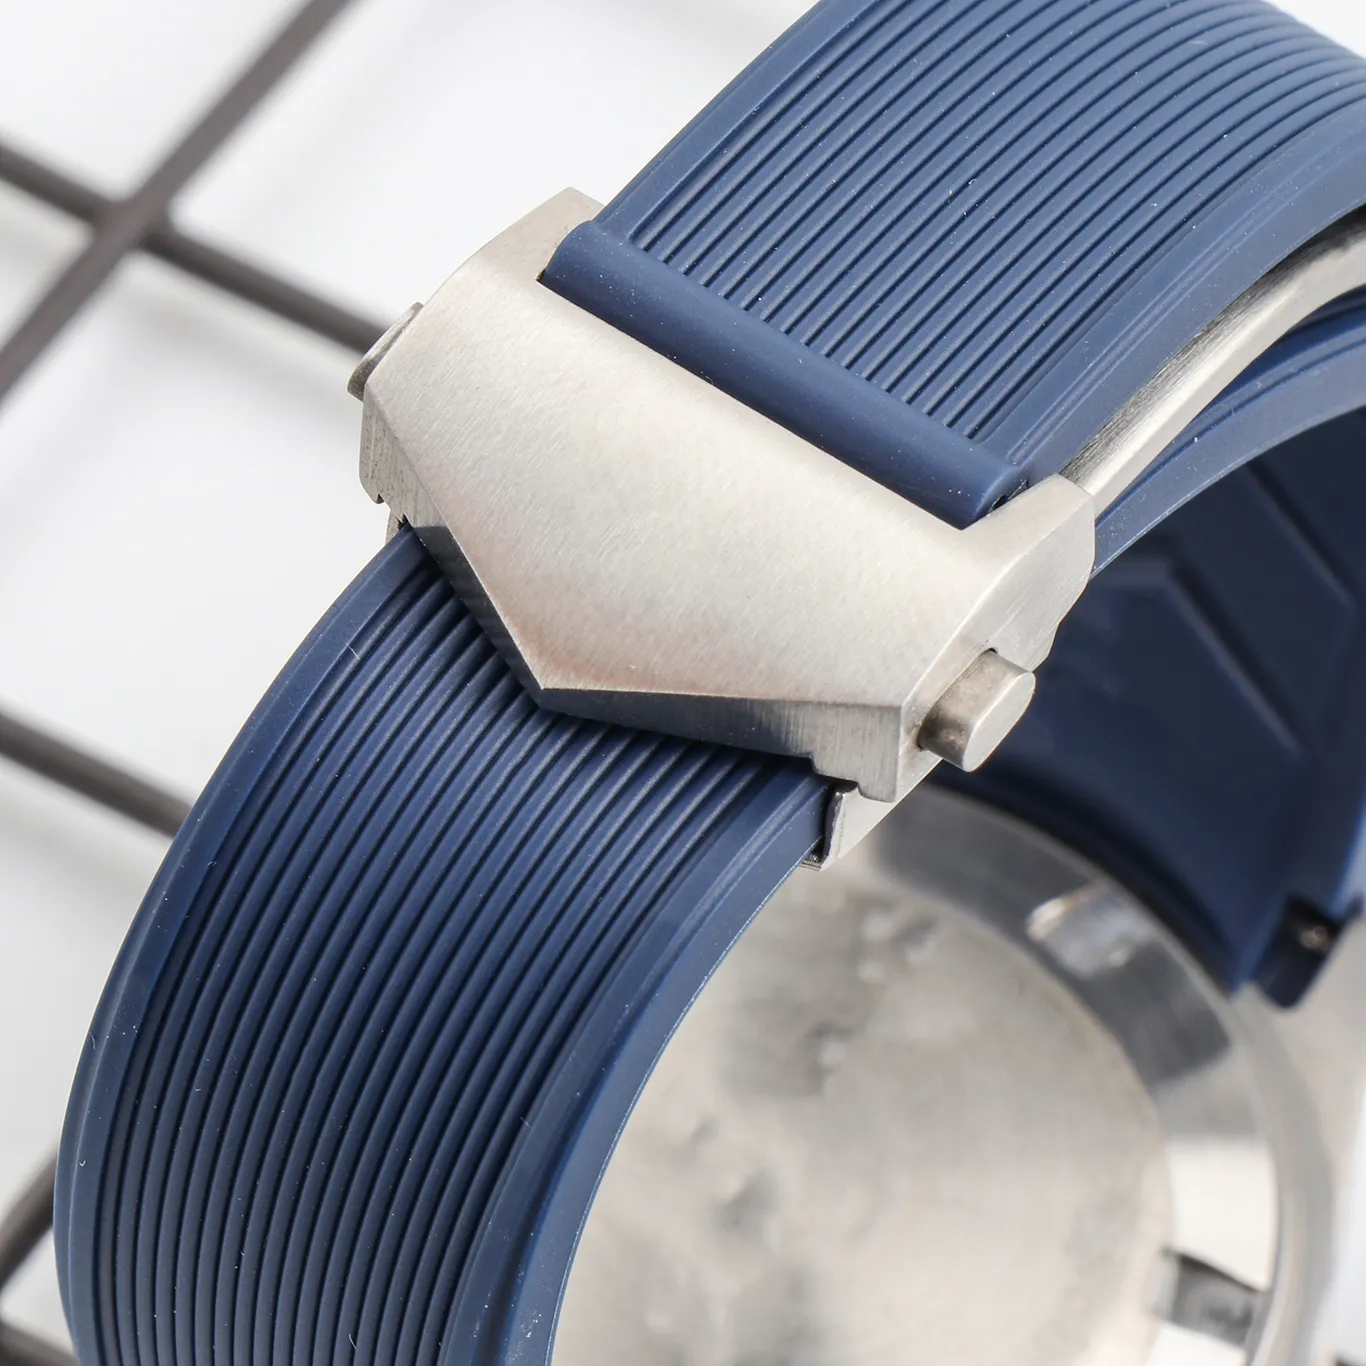 Wasserdichtes Gummiarmband, Edelstahl-Faltschließe, Uhrenarmband für AQUARACER-Armbanduhr, 22–18 mm, Schwarz, Blau, Braun287o